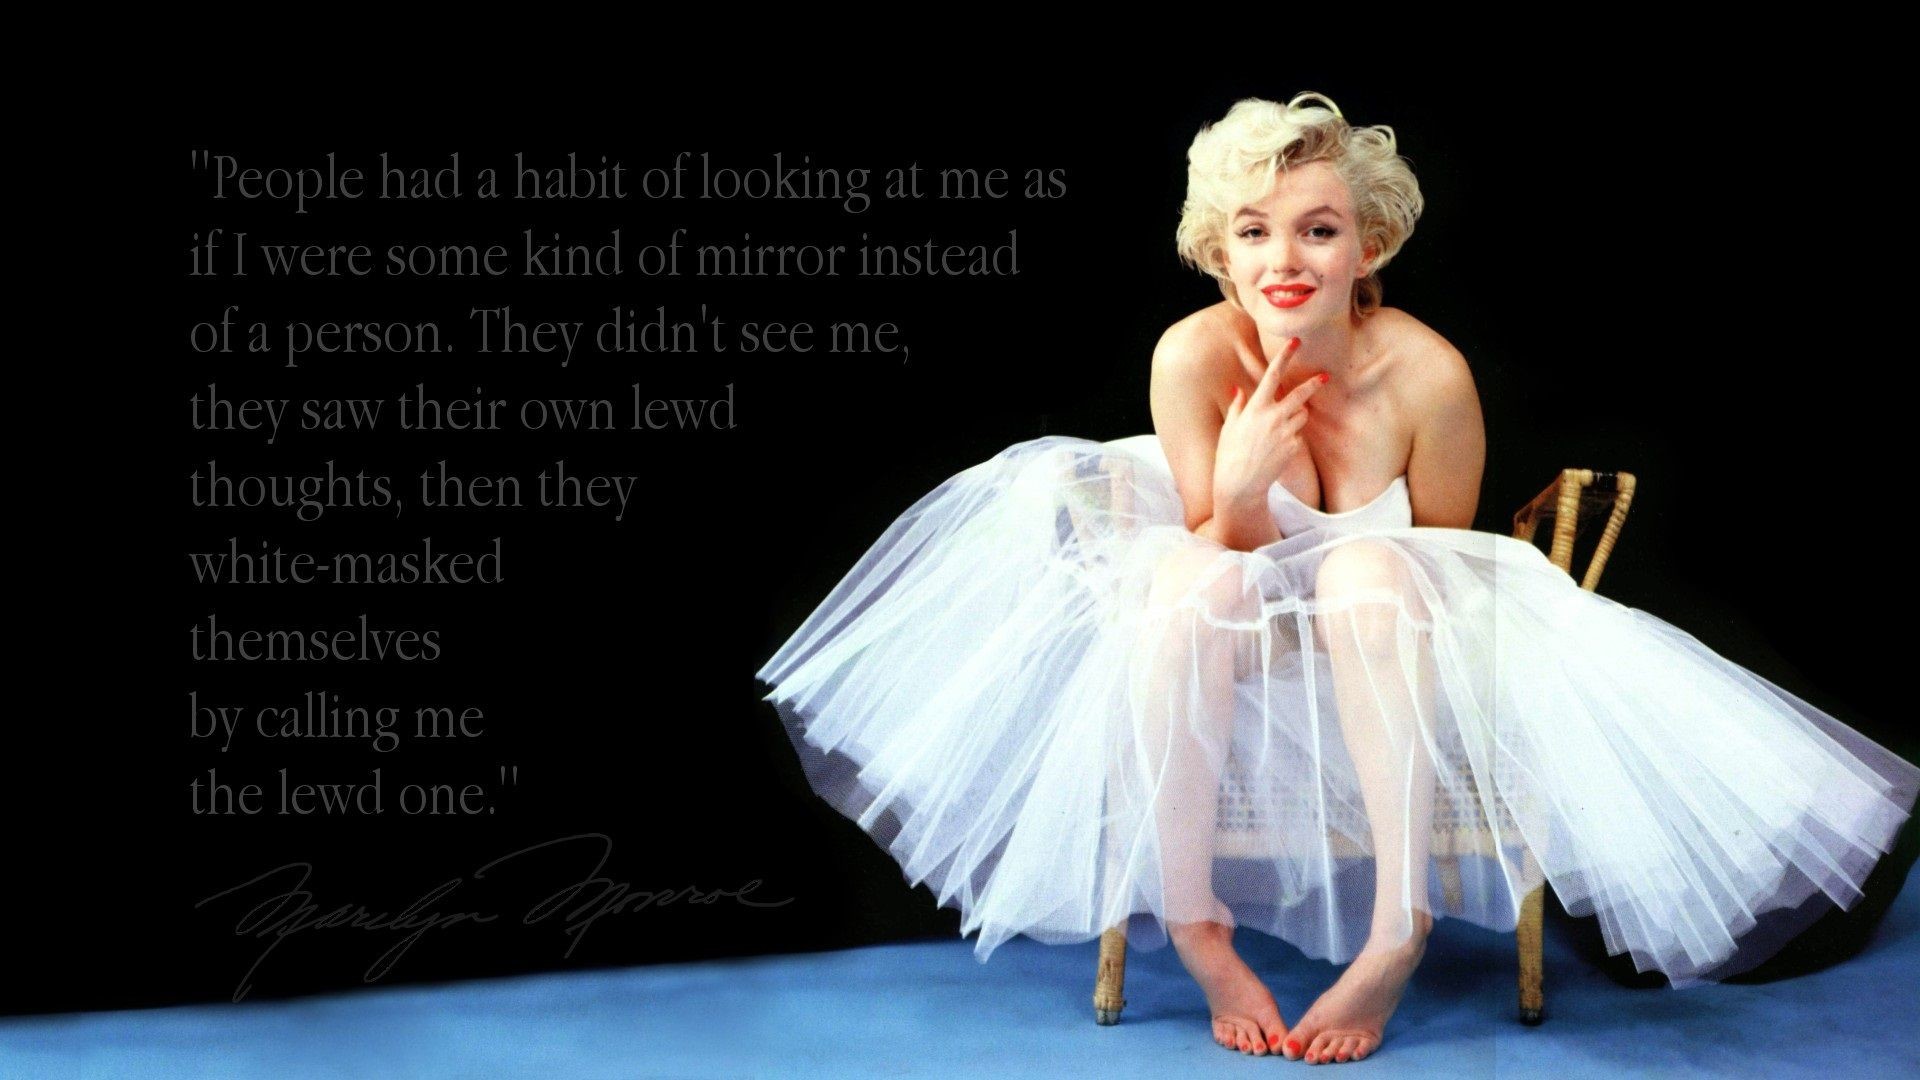 1920x1080, Marilyn Monroe Wallpapers Hd Download 1920ã1200 - Marilyn Monroe White Dress Sitting Down - HD Wallpaper 